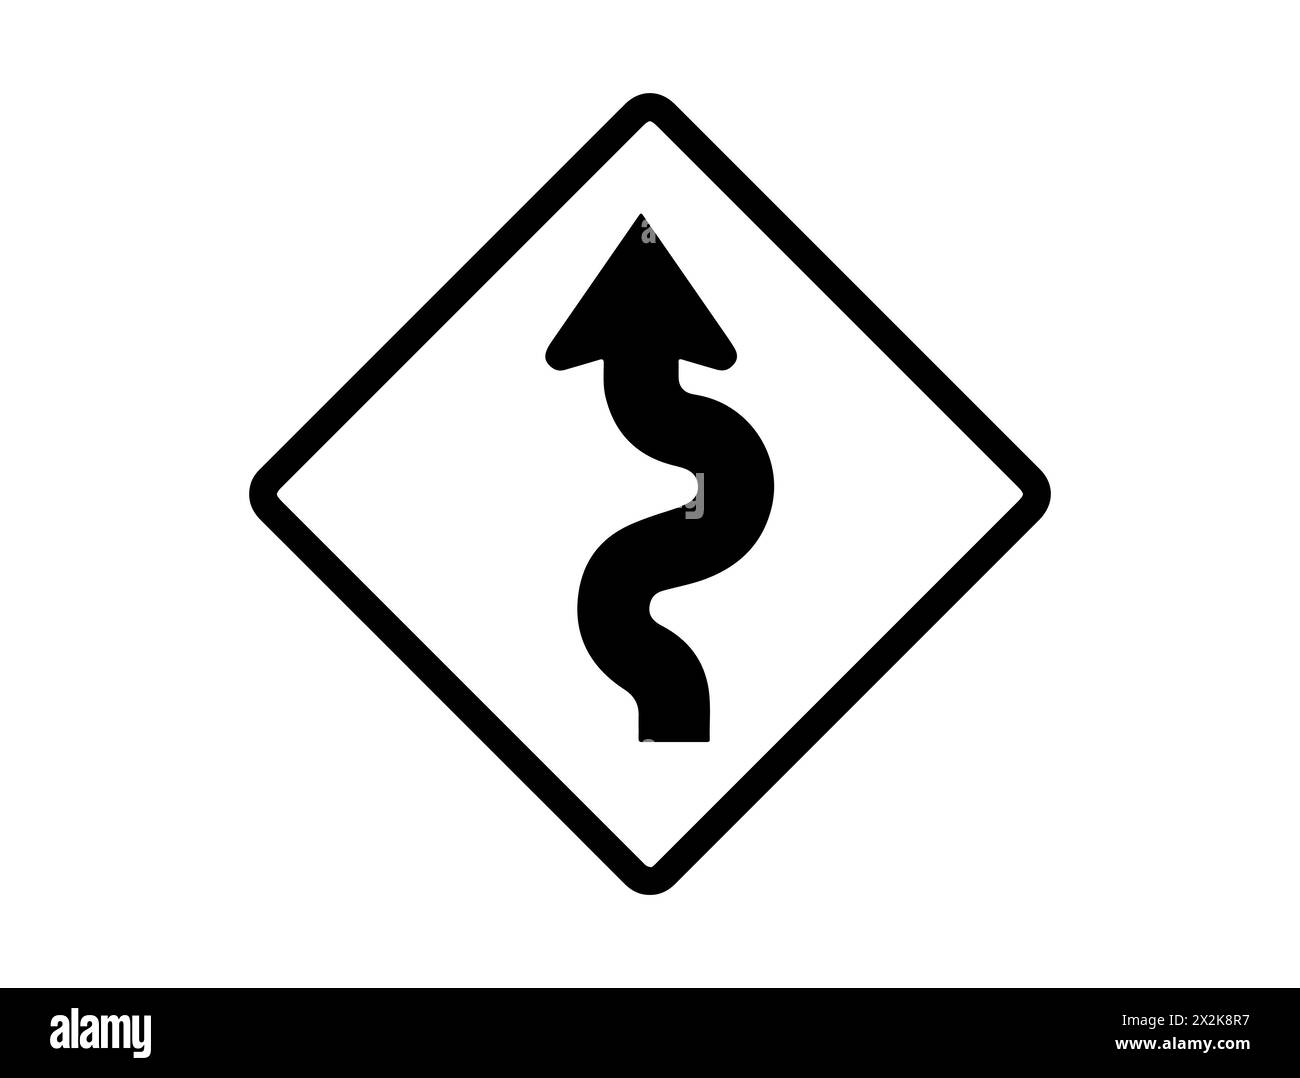 Curvy road sign silhouette vector art Stock Vector